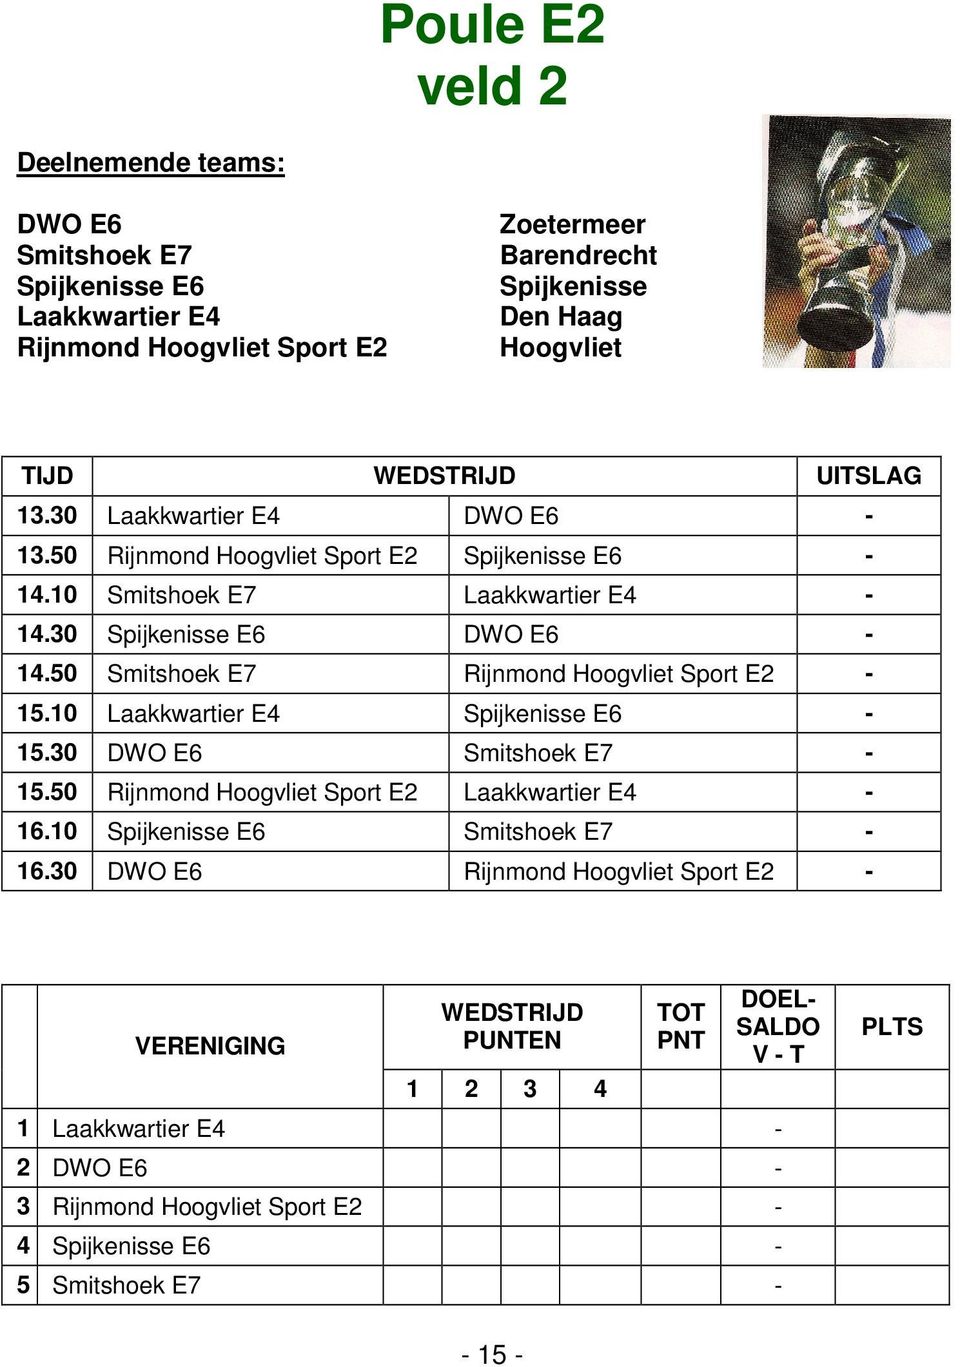 50 Smitshoek E7 Rijnmond Sport E2-15.10 Laakkwartier E4 Spijkenisse E6-15.30 DWO E6 Smitshoek E7-15.50 Rijnmond Sport E2 Laakkwartier E4-16.